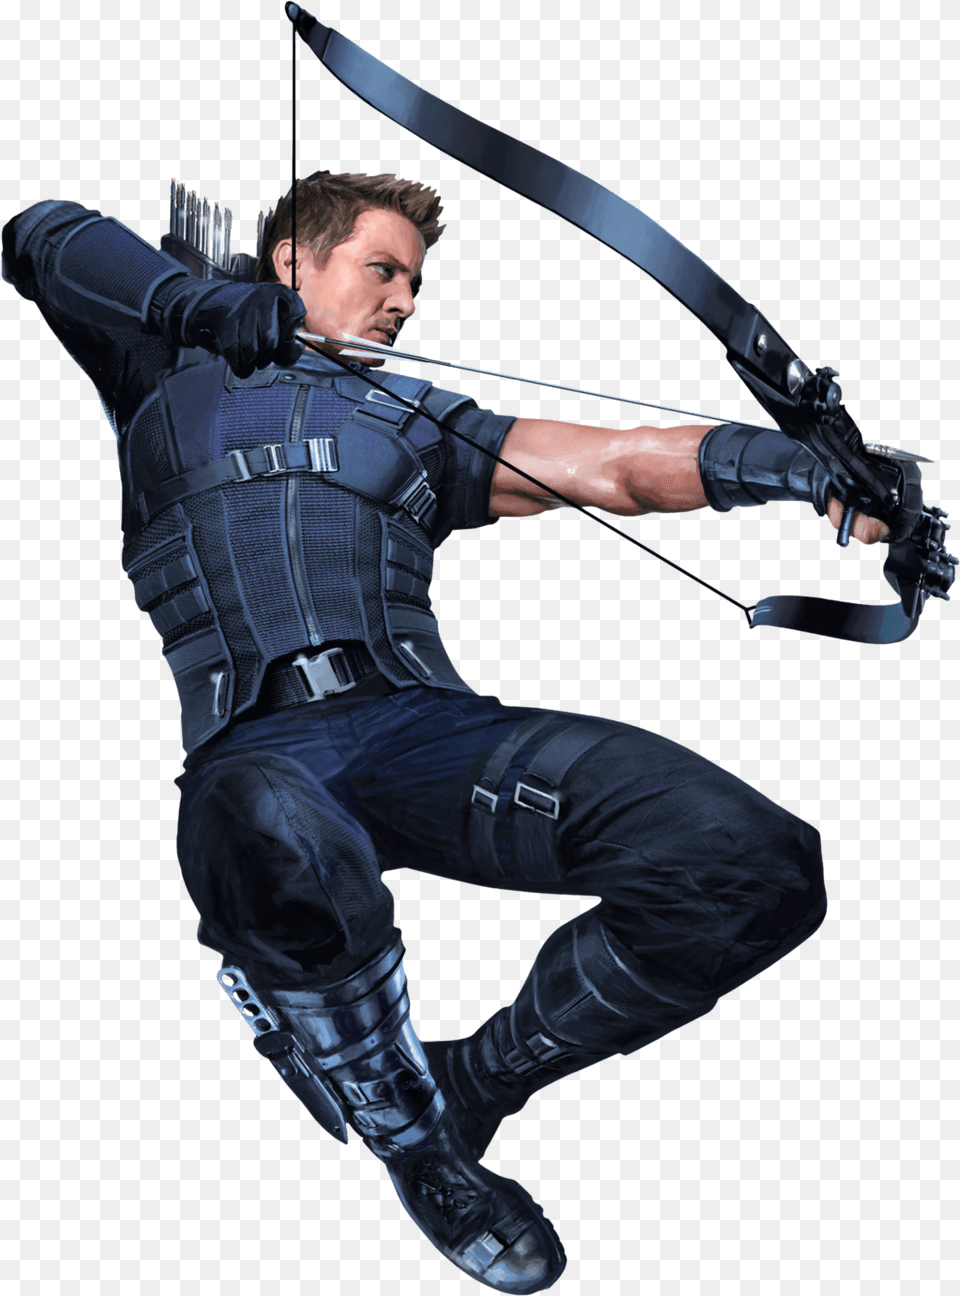 Weapon, Archer, Archery, Bow Png Image